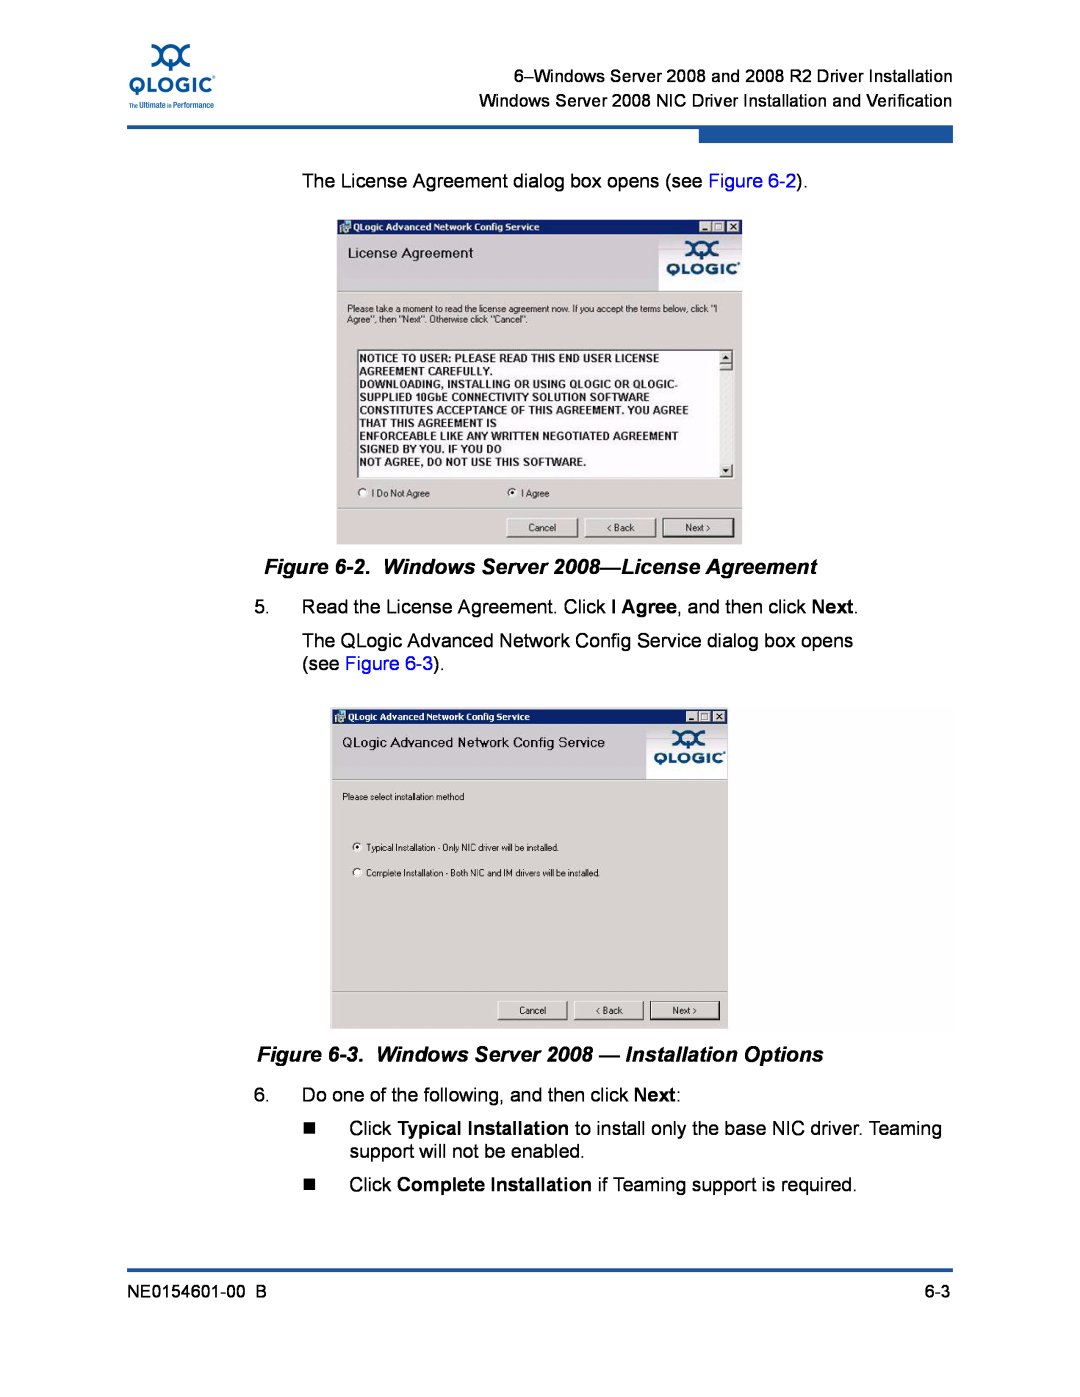 Q-Logic 3000, 3100 manual 2. Windows Server 2008-License Agreement, 3. Windows Server 2008 - Installation Options 